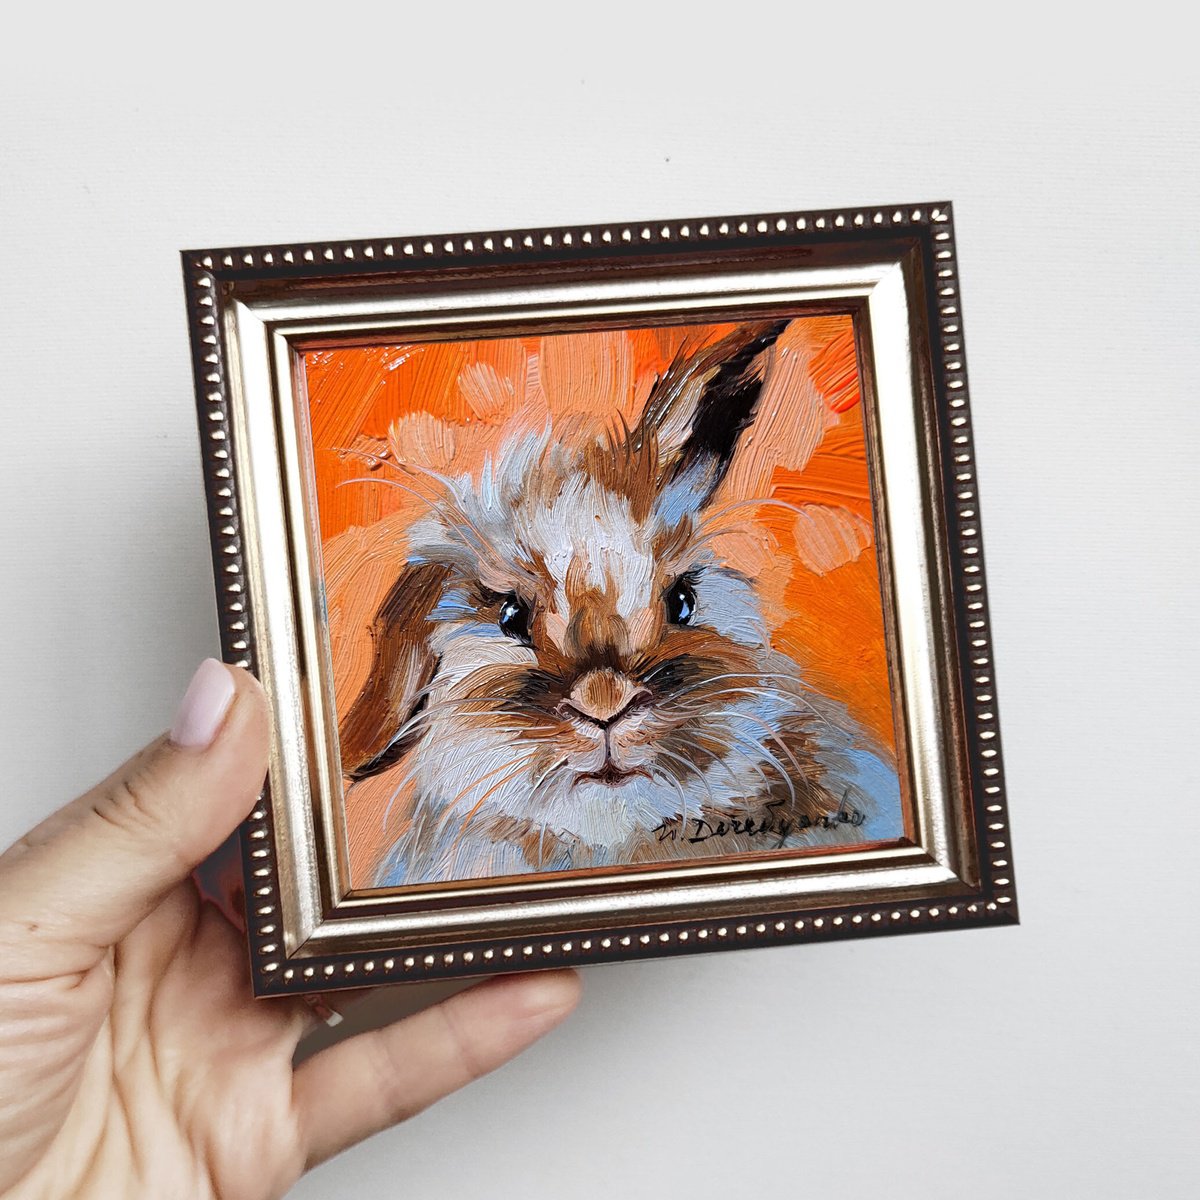 Bunny man painting original oil framed 4x4, Small framed art rabbit artwork orange backgro... by Nataly Derevyanko